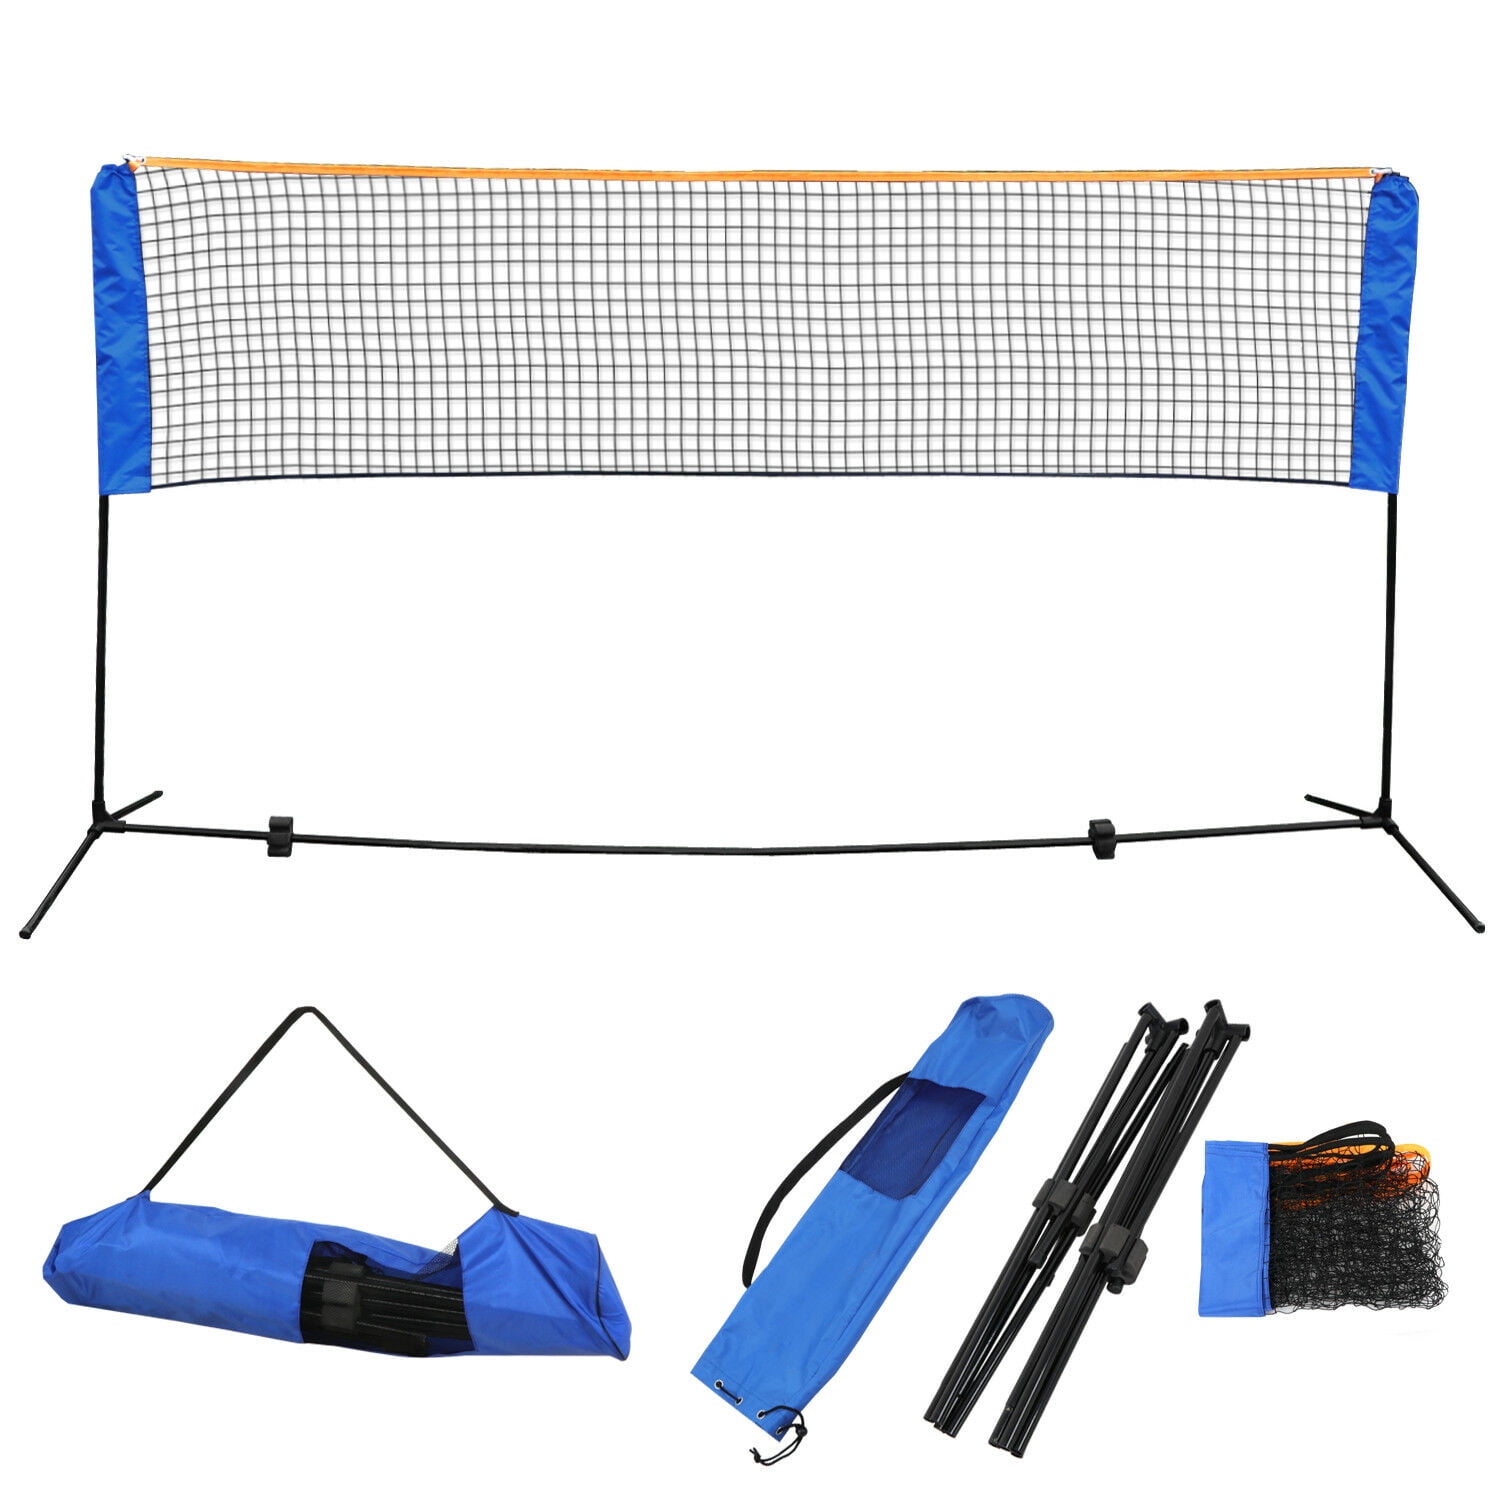 Portable 10'x5' Badminton Net Beach Volleyball Tennis Training w/ Carrying Bag 